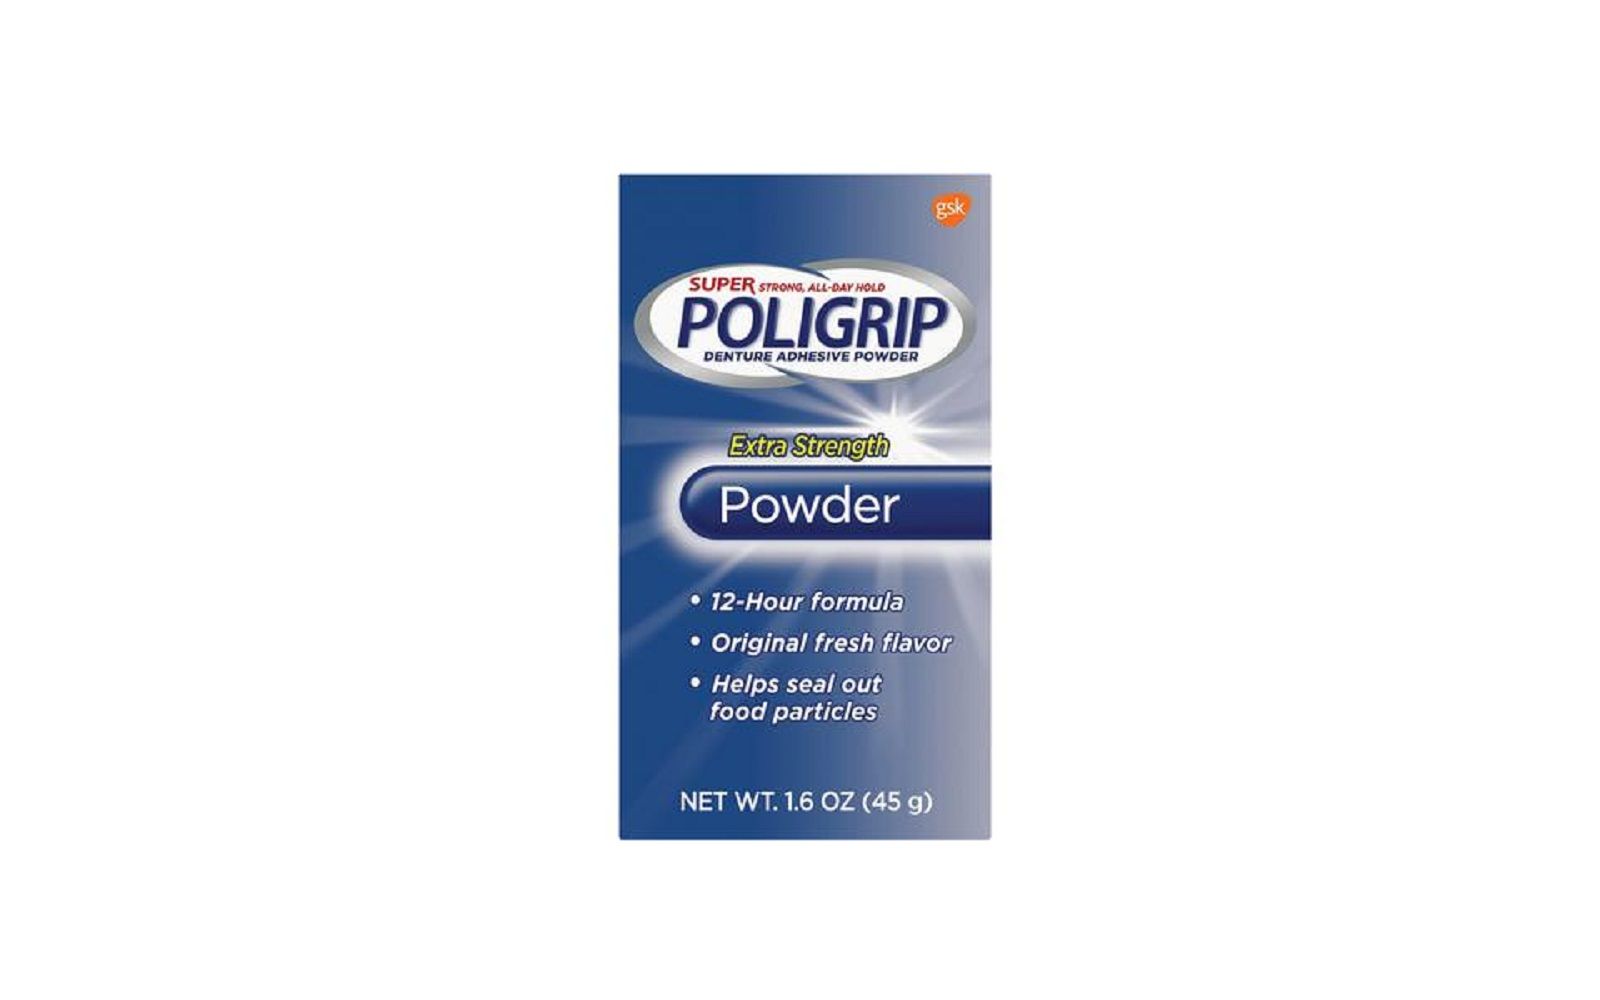 Super poligrip® extra strength powder, 1. 6 oz bottle